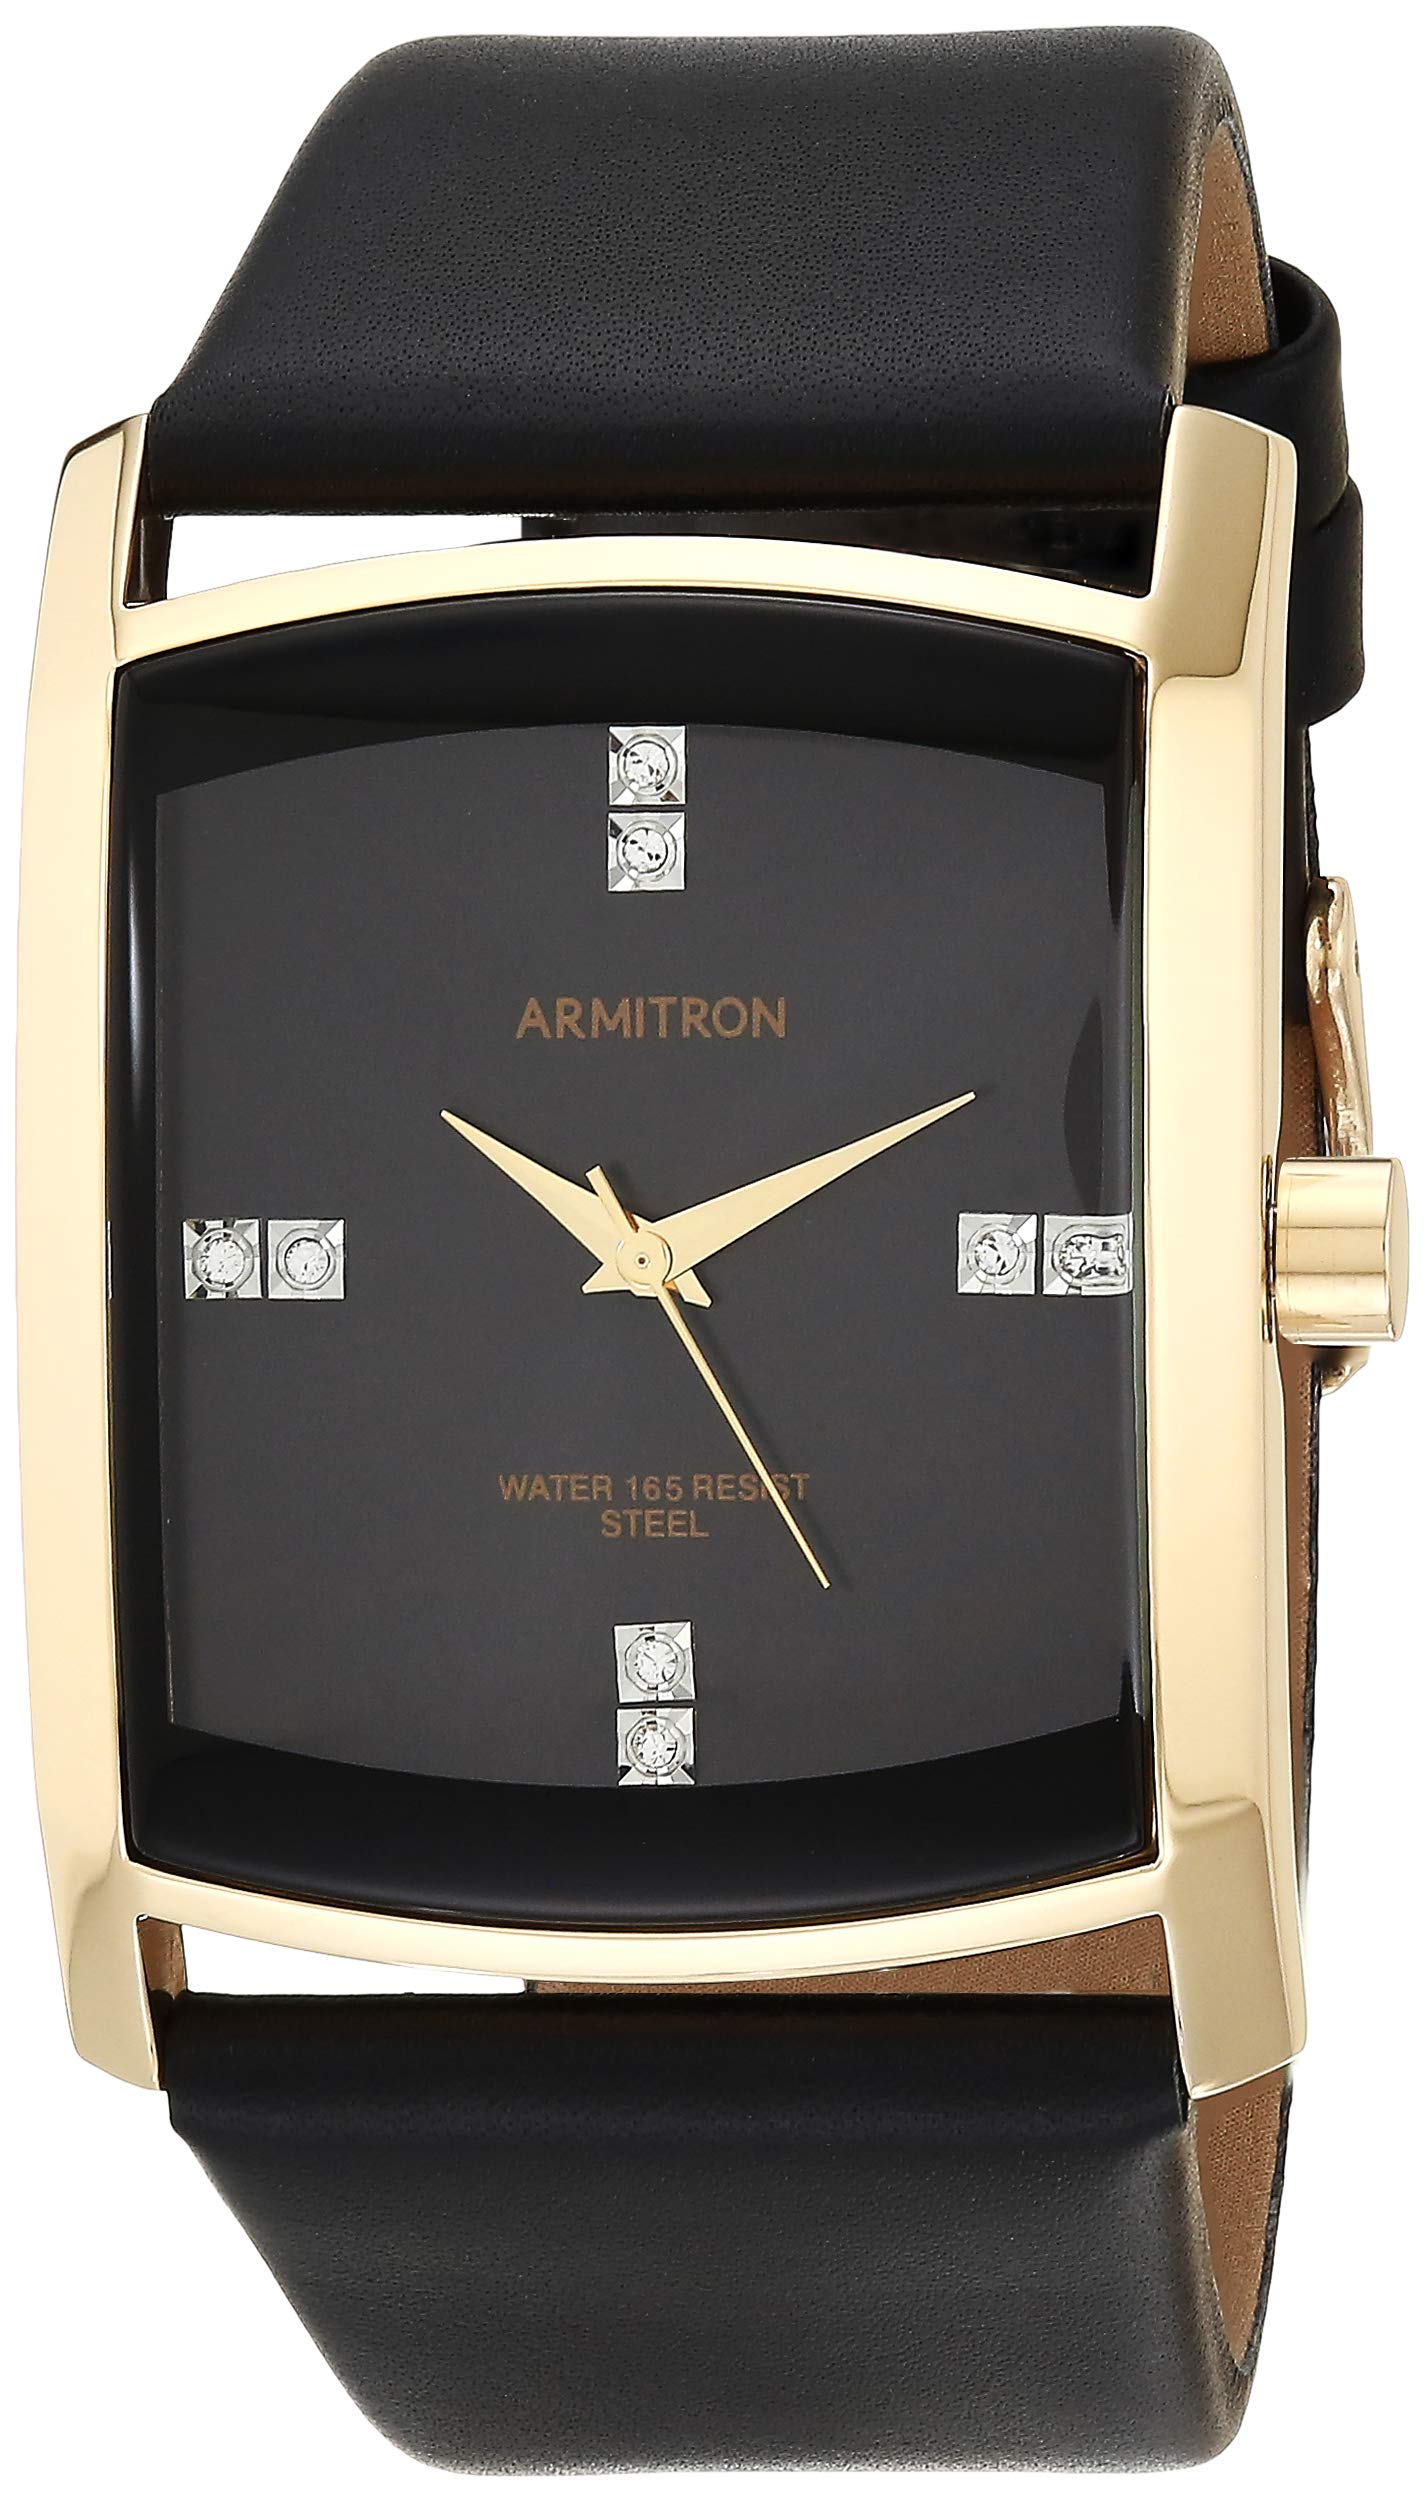 Armitron-B002DKVG9E-Rectangular-Watch